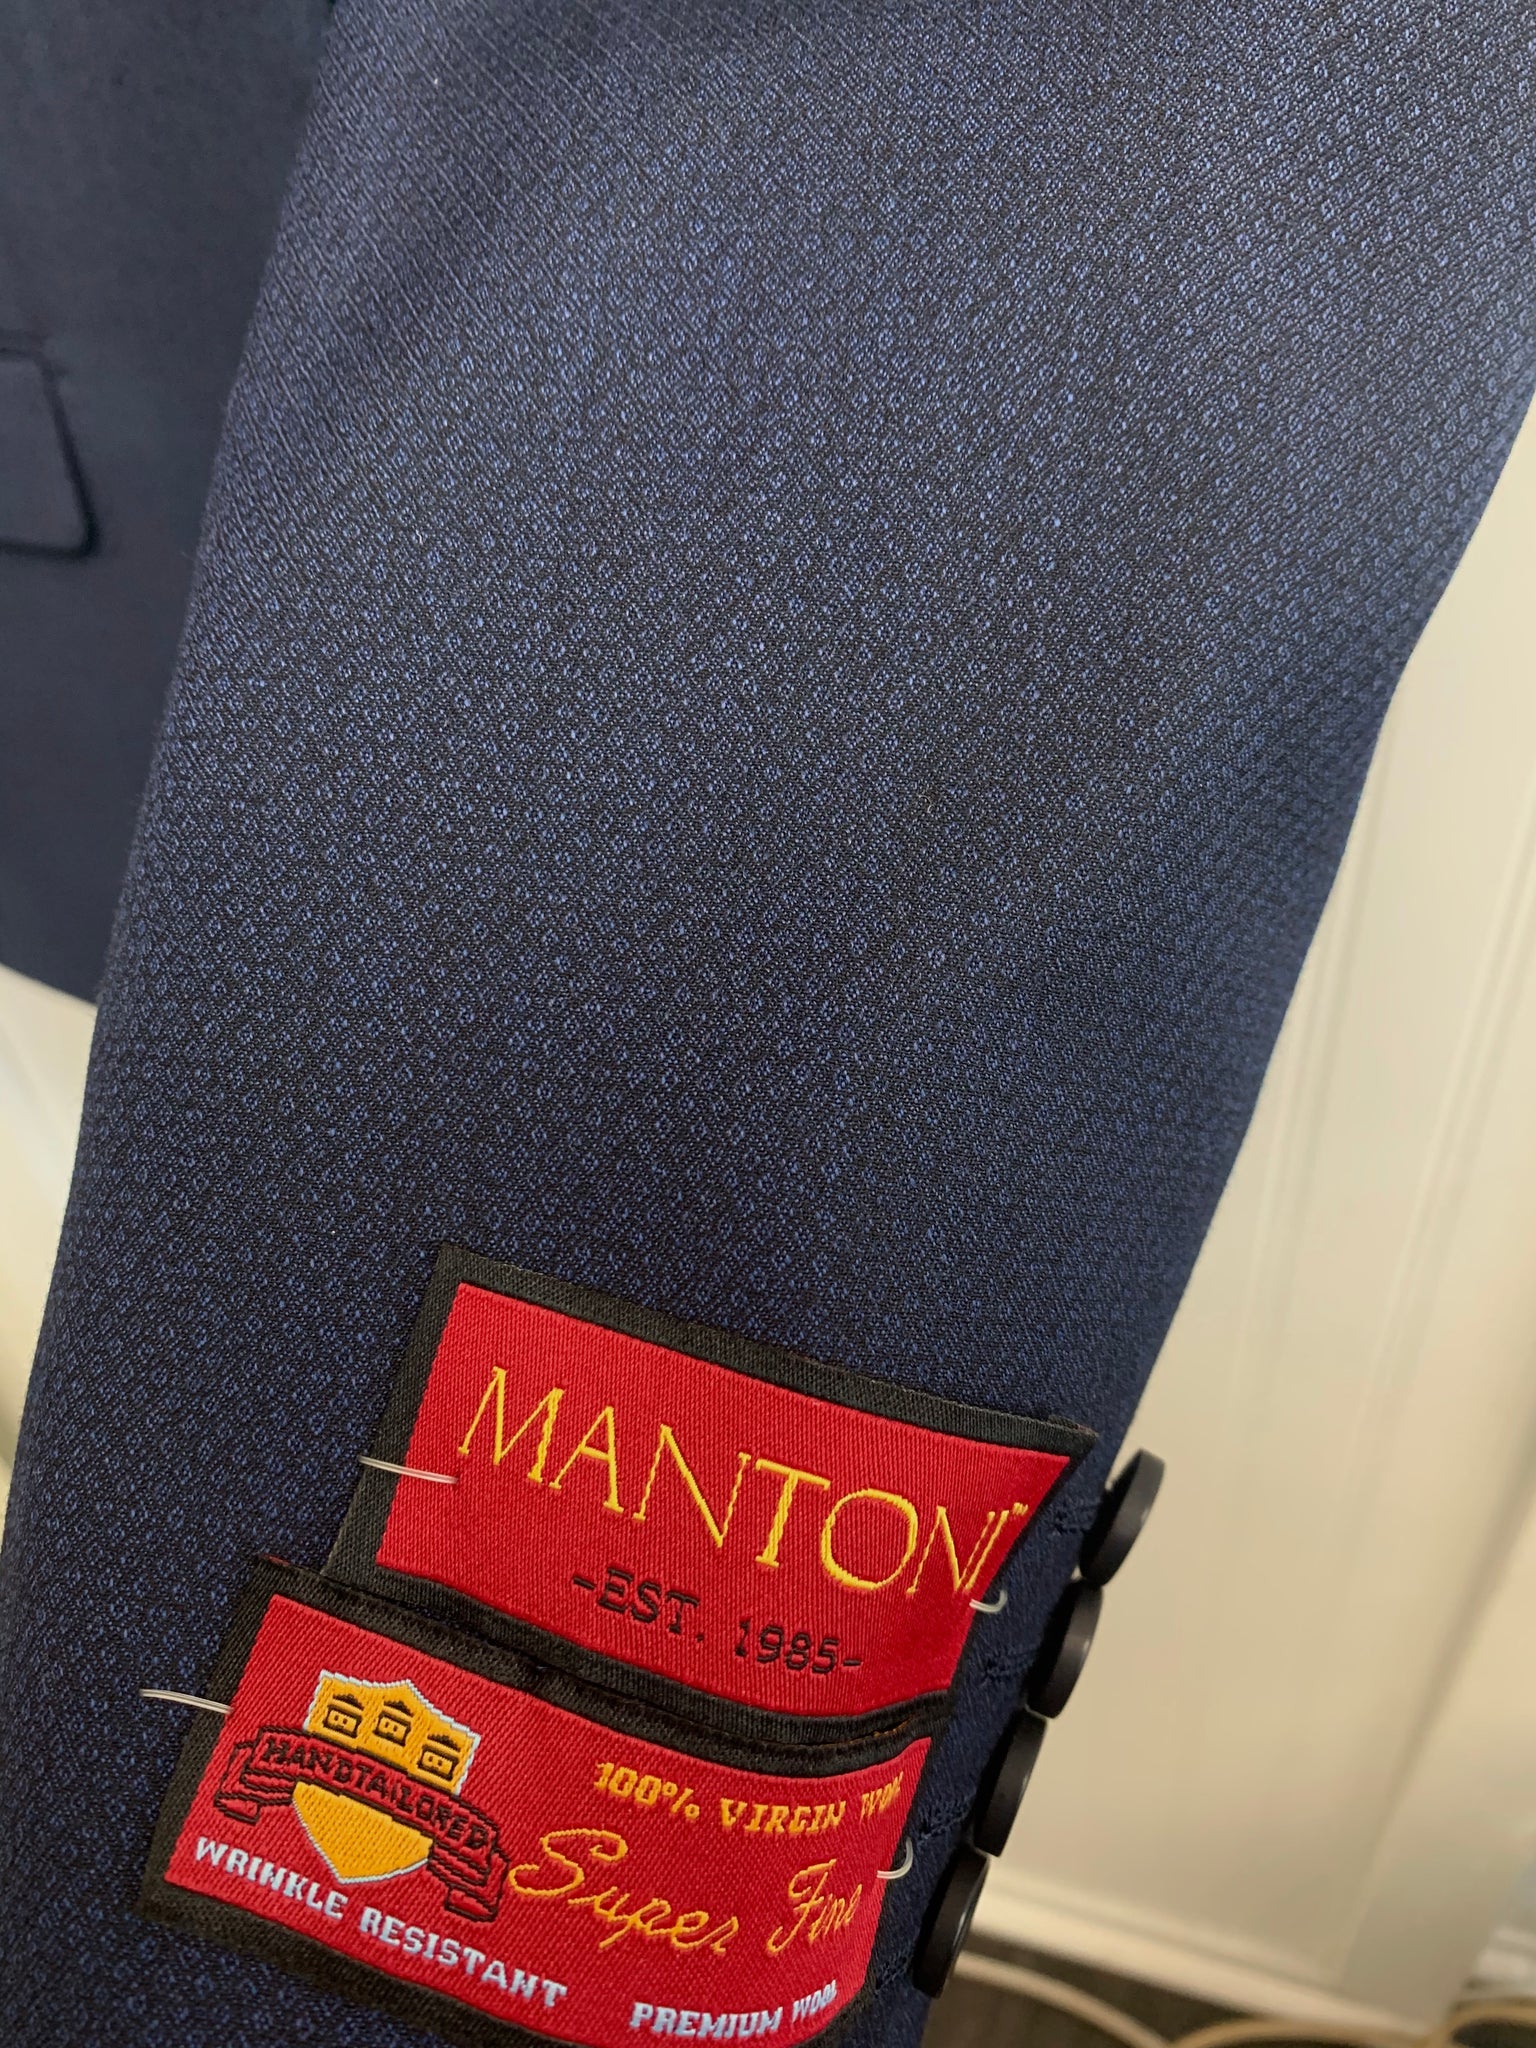 Mantoni Super 140 Wool Suit- 87140-2 (Navy w/ Blk Diamond Underlay)